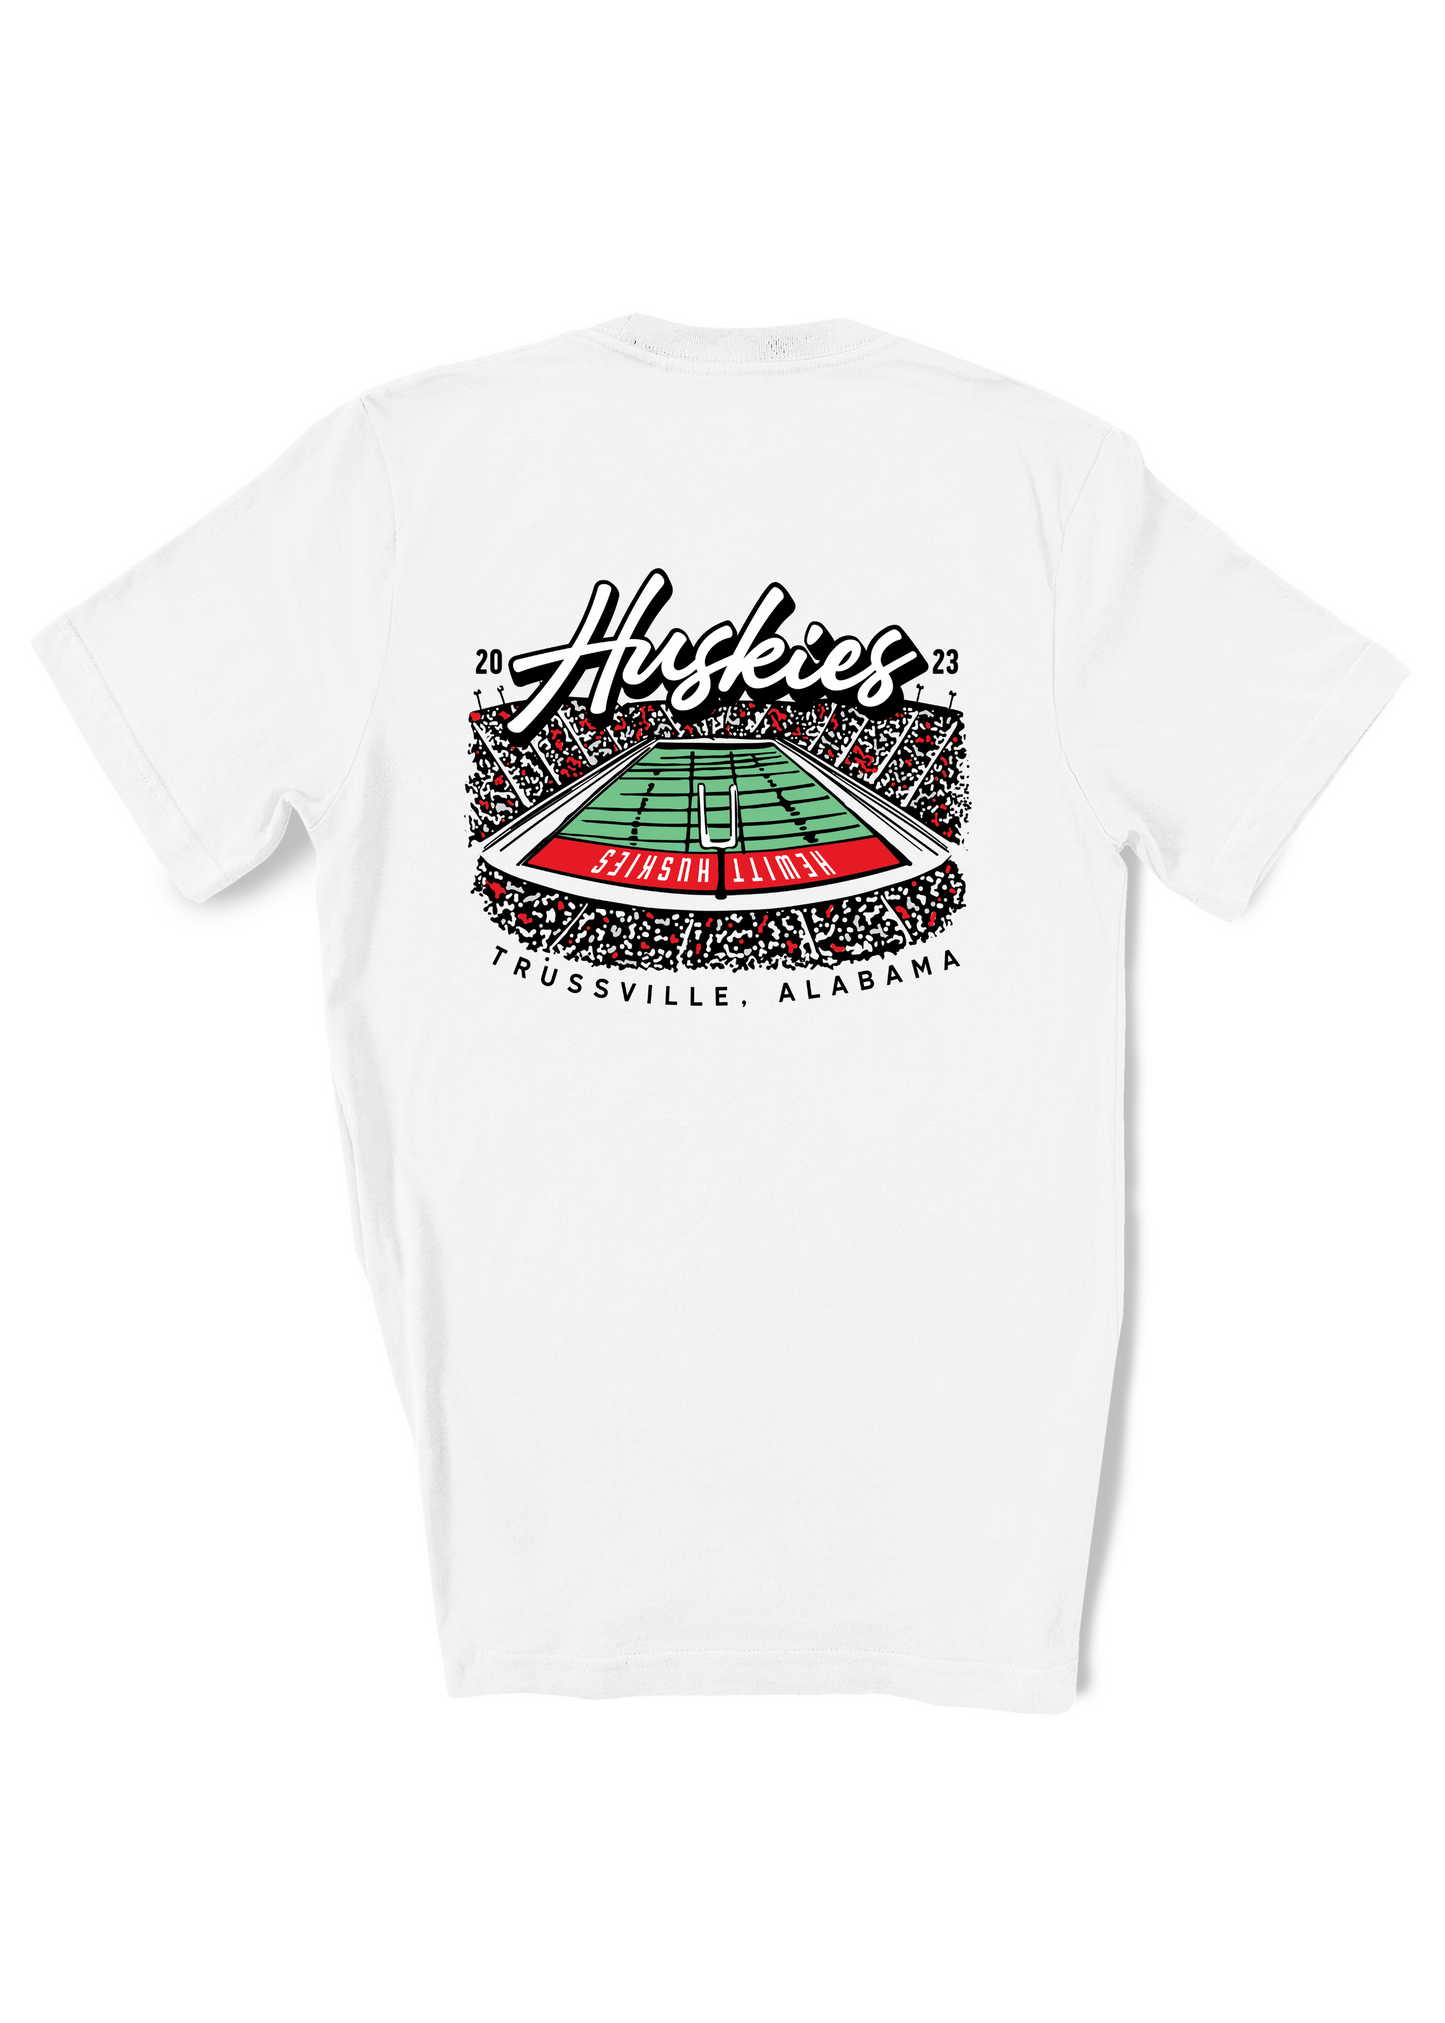 Huskies Stadium | Kids Tee-Kids Tees-Sister Shirts-Sister Shirts, Cute & Custom Tees for Mama & Littles in Trussville, Alabama.